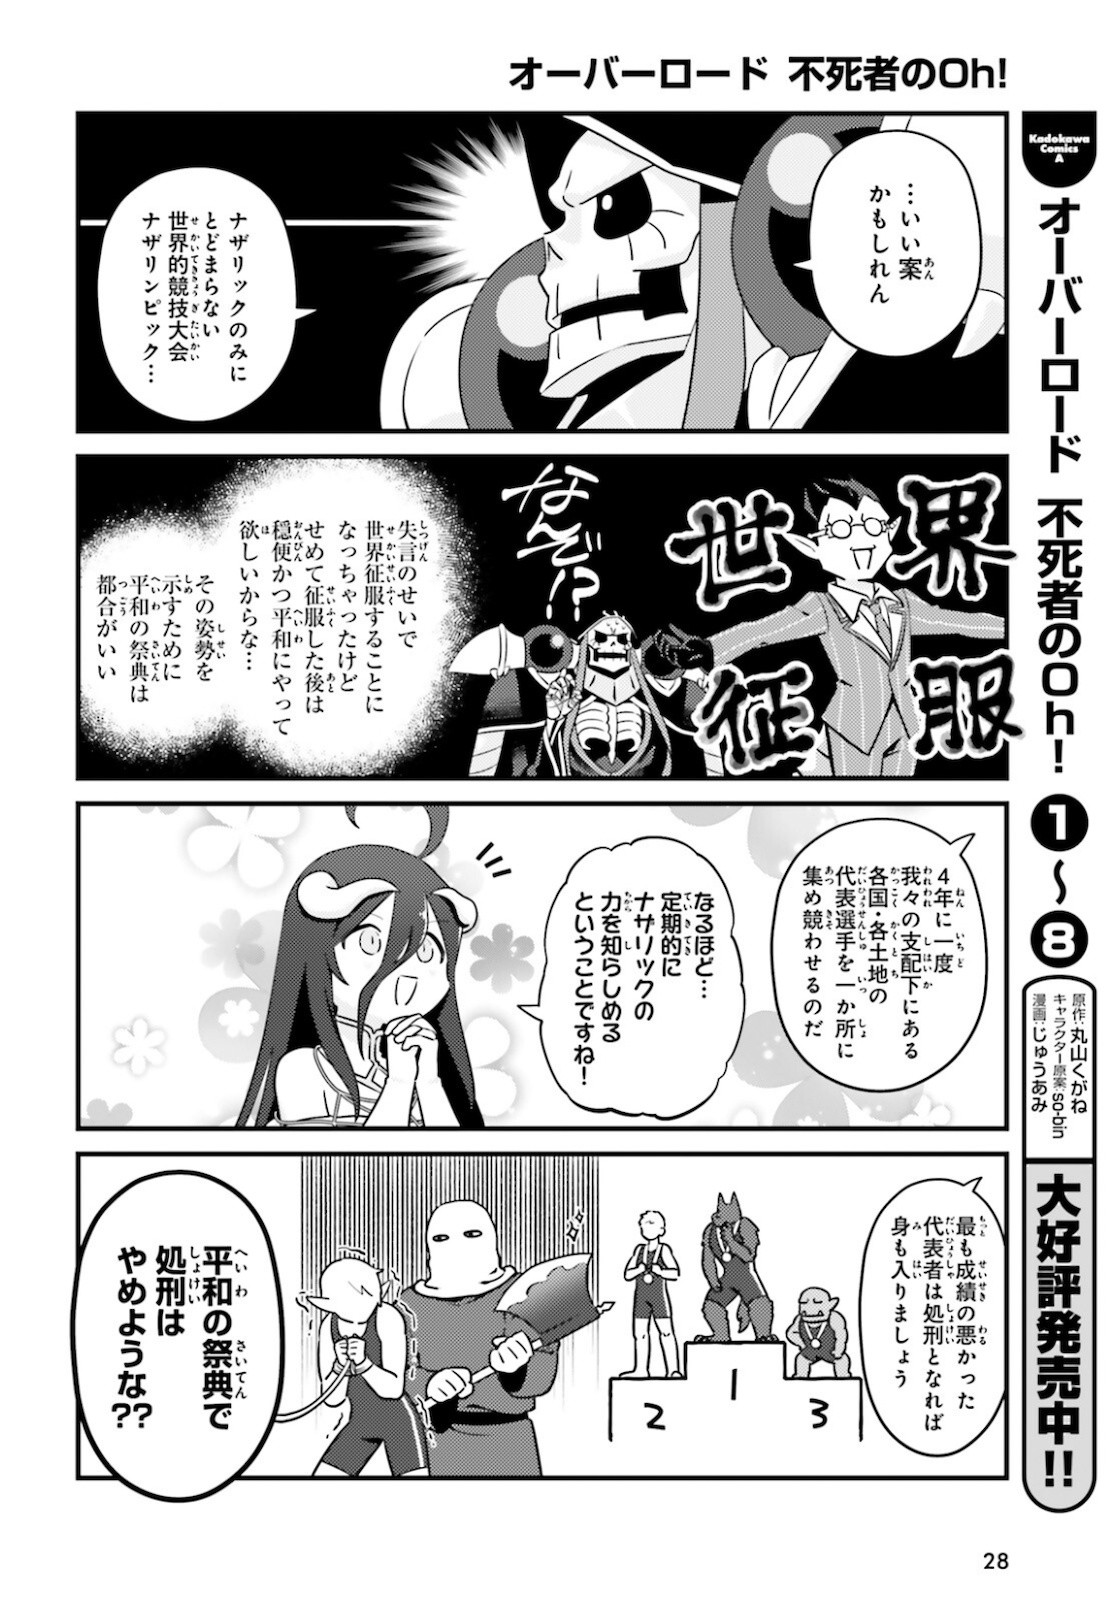 Overlord-Fushisha-no-Oh - Chapter 50 - Page 4